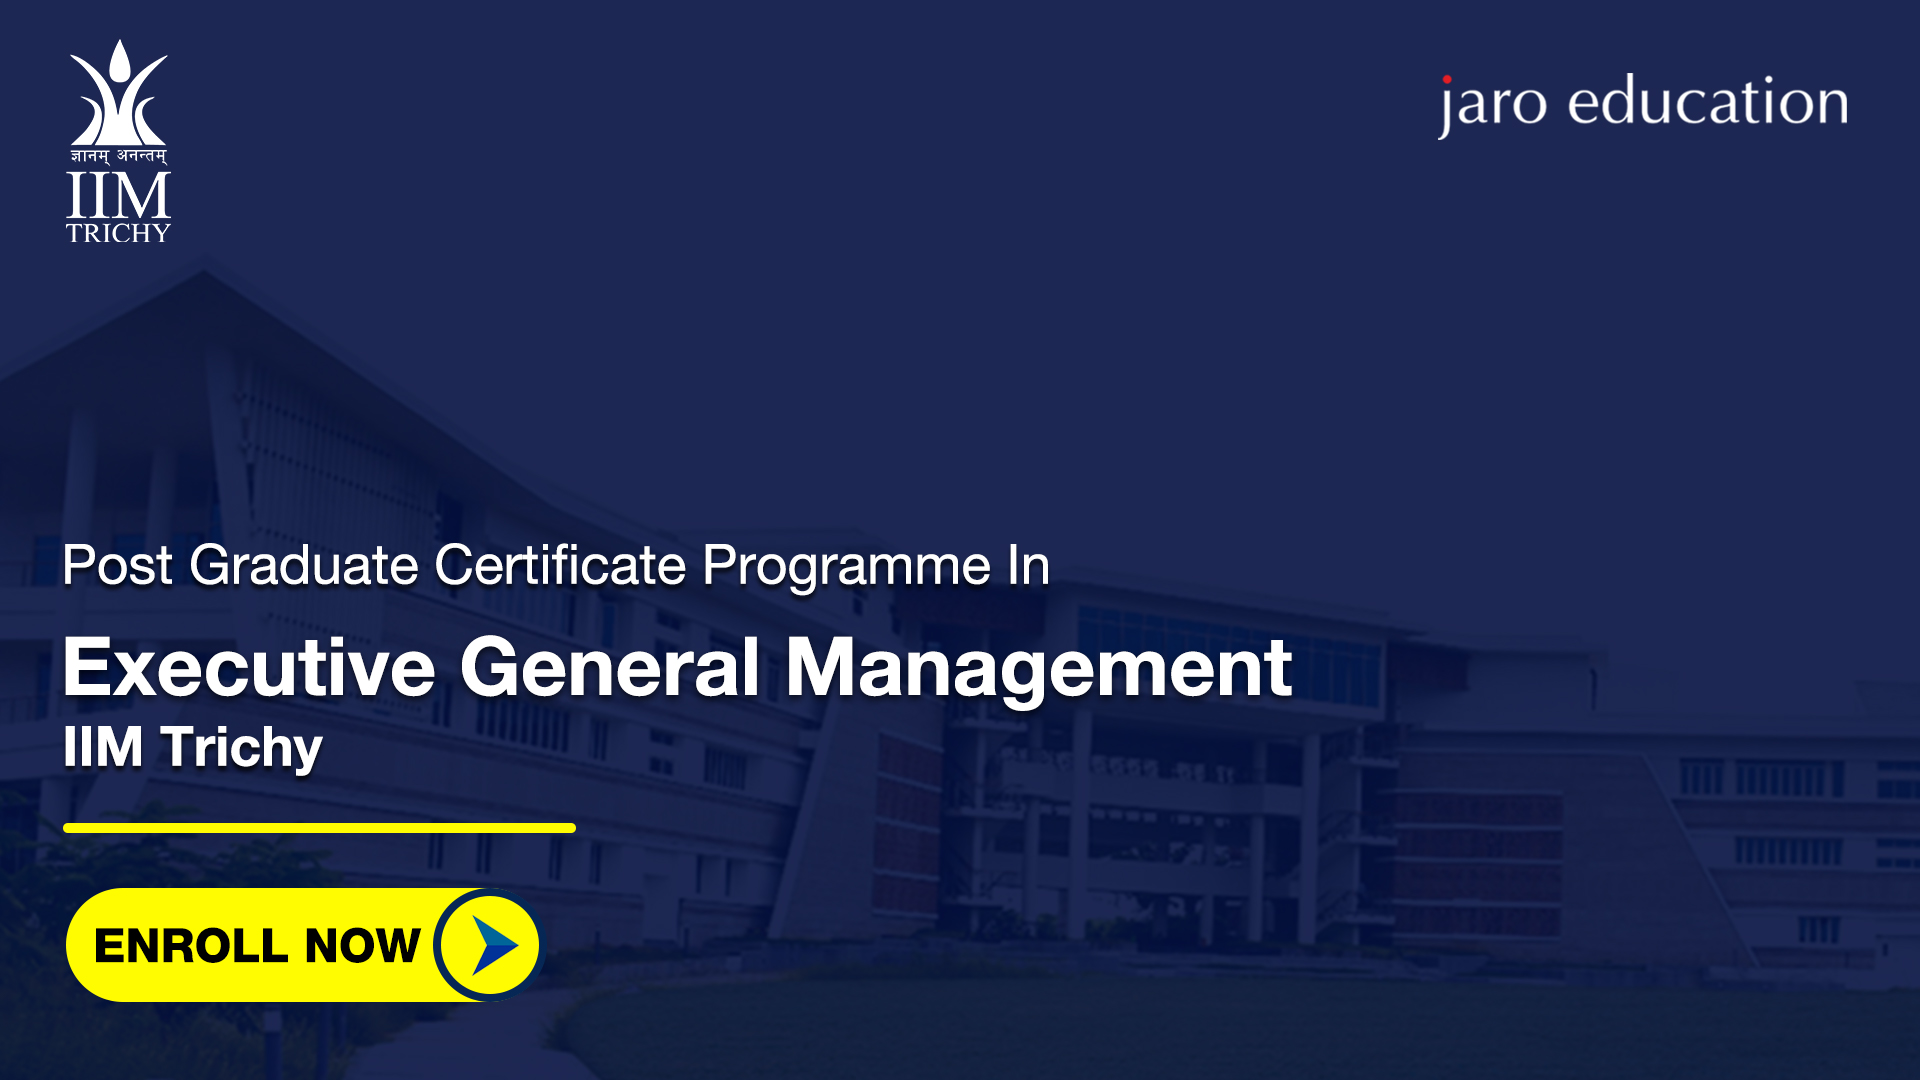 Executive General Management Programme